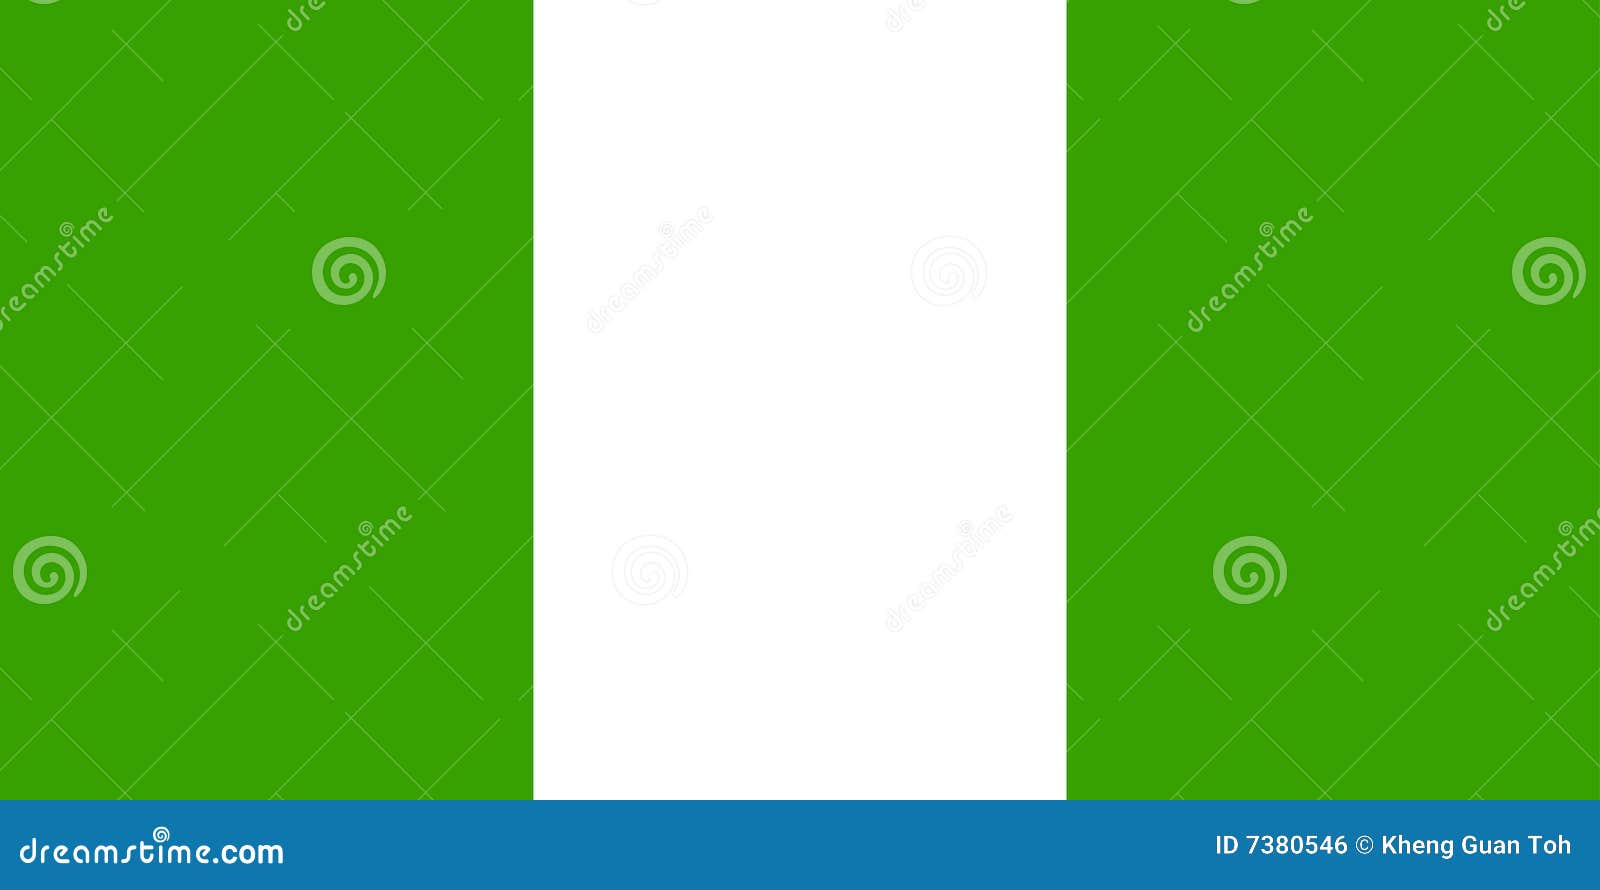 clipart nigeria flag - photo #37